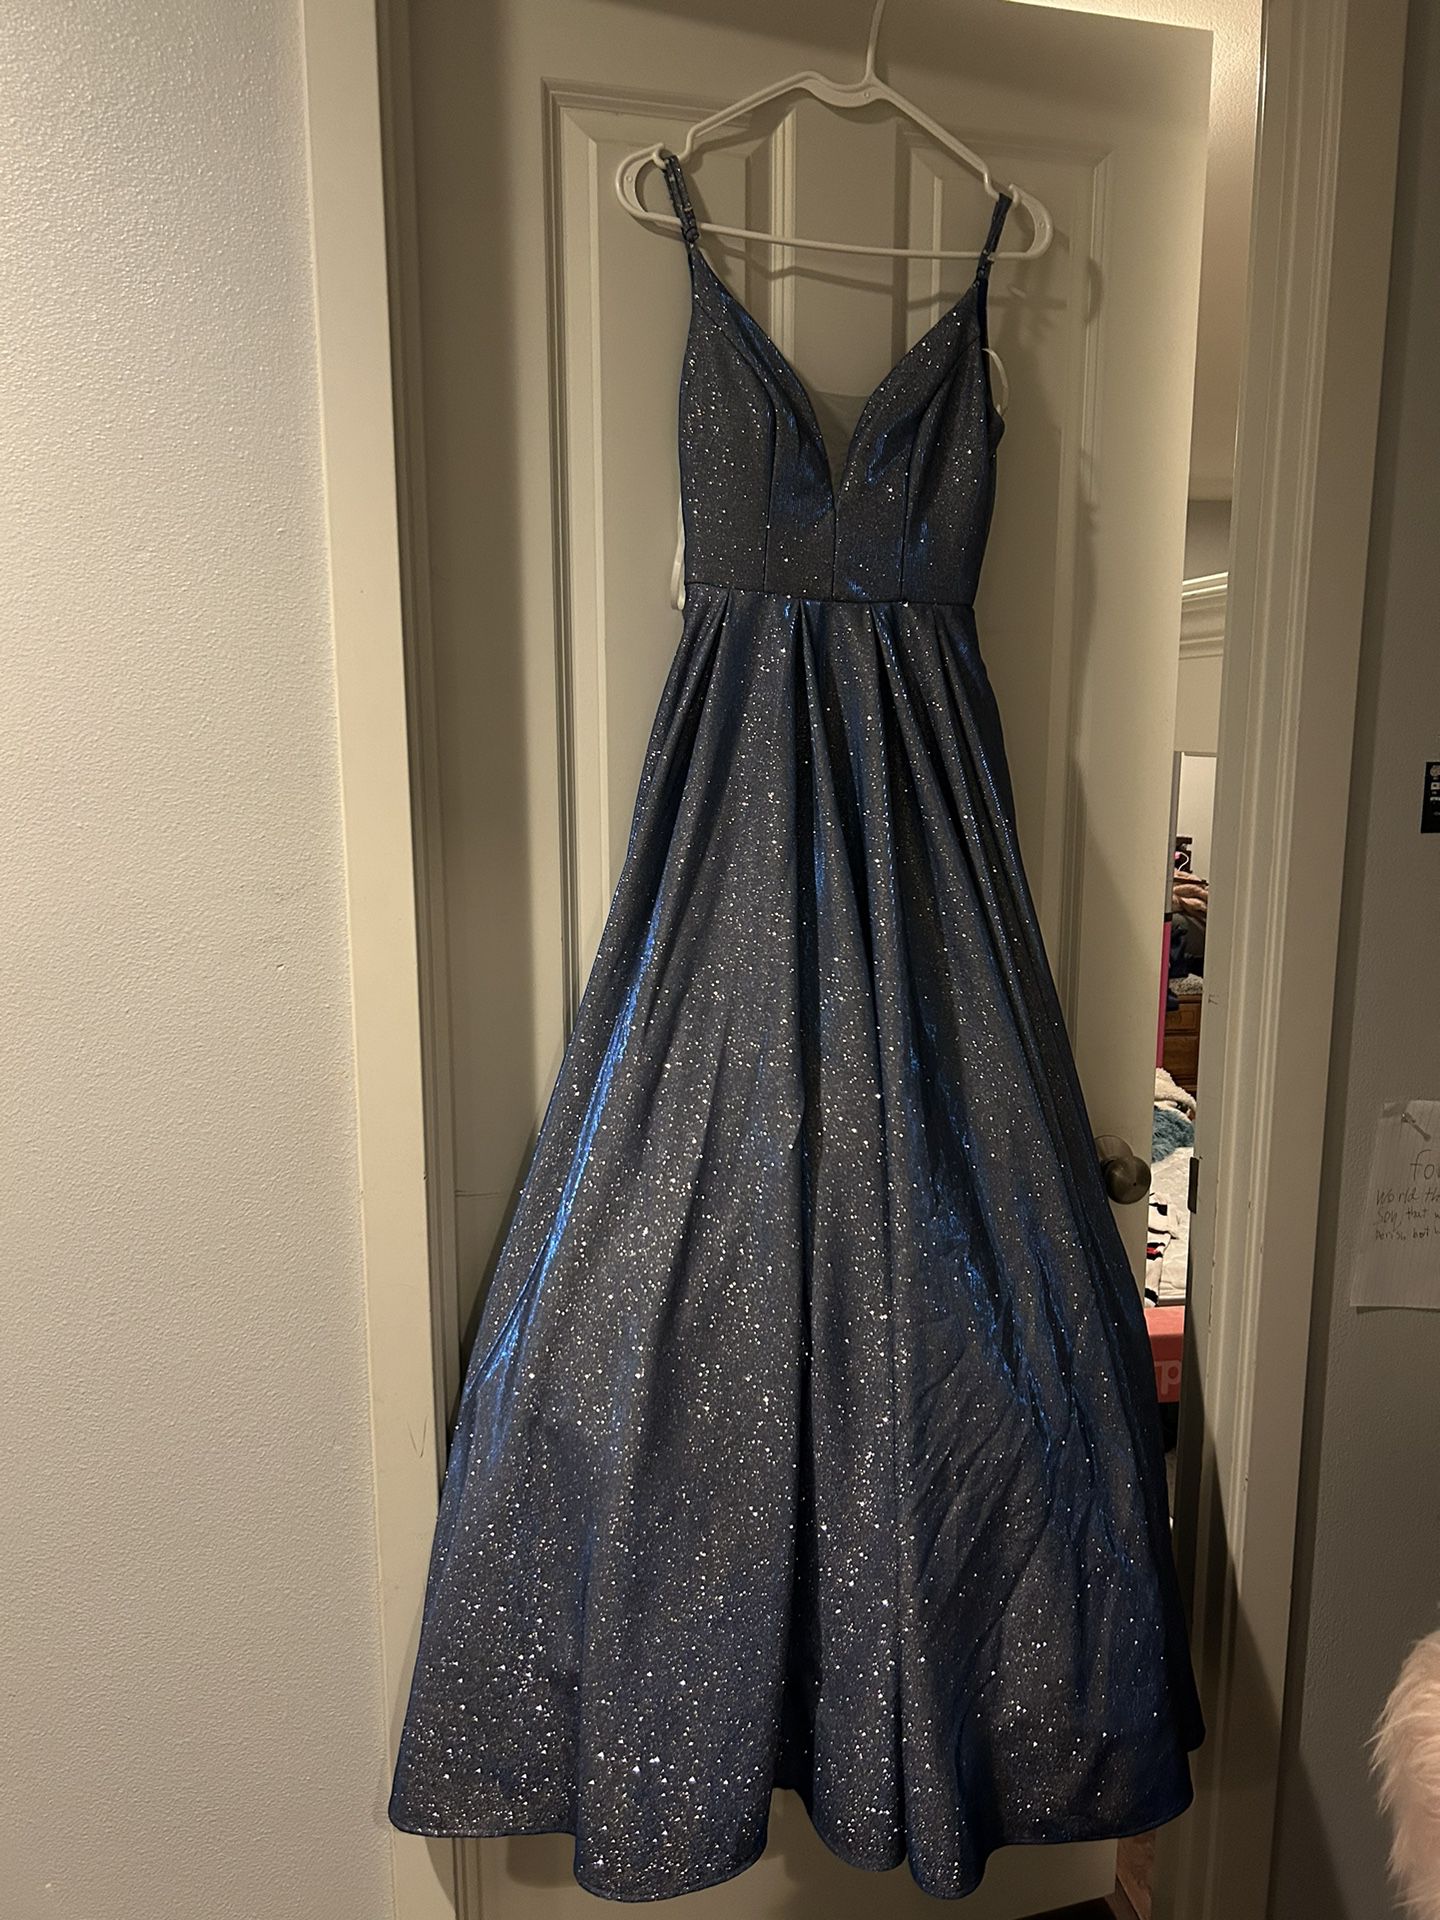 Size 3 Blue Sparkly Prom Dress